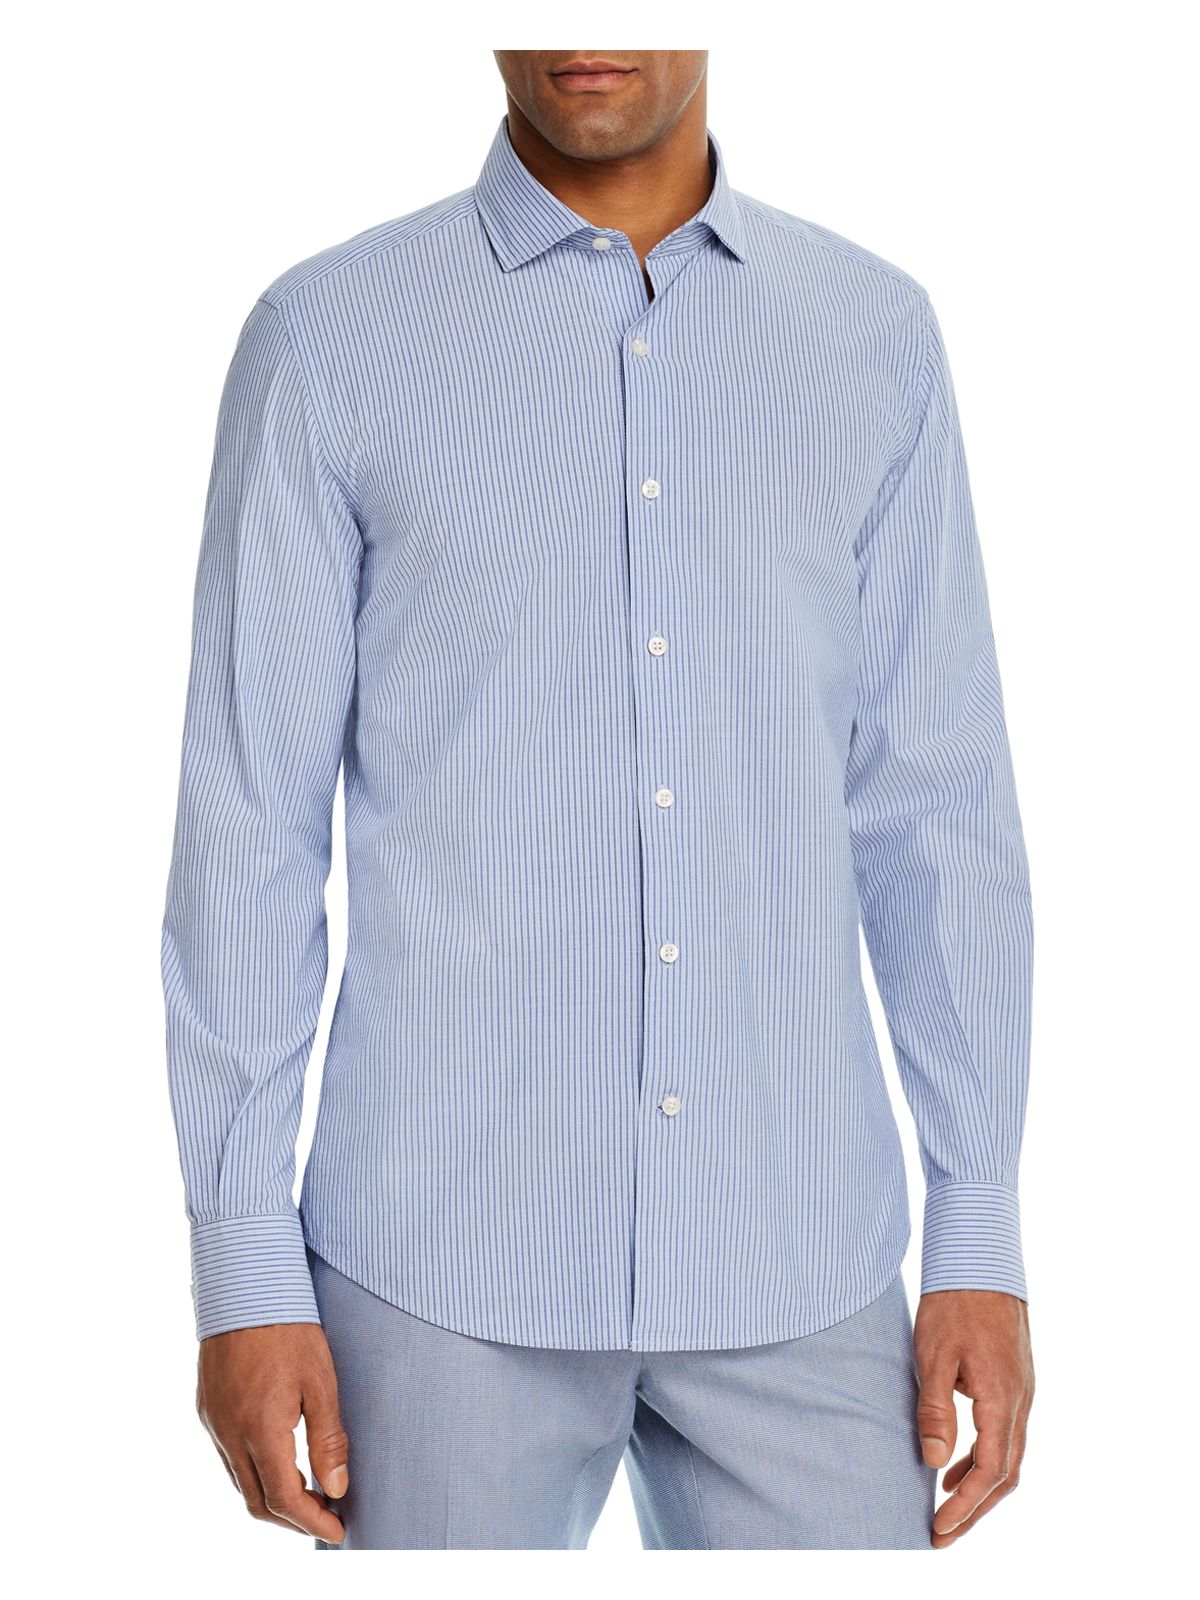 DYLAN GRAY Mens Light Blue Check Long Sleeve Button Down Casual Shirt XL